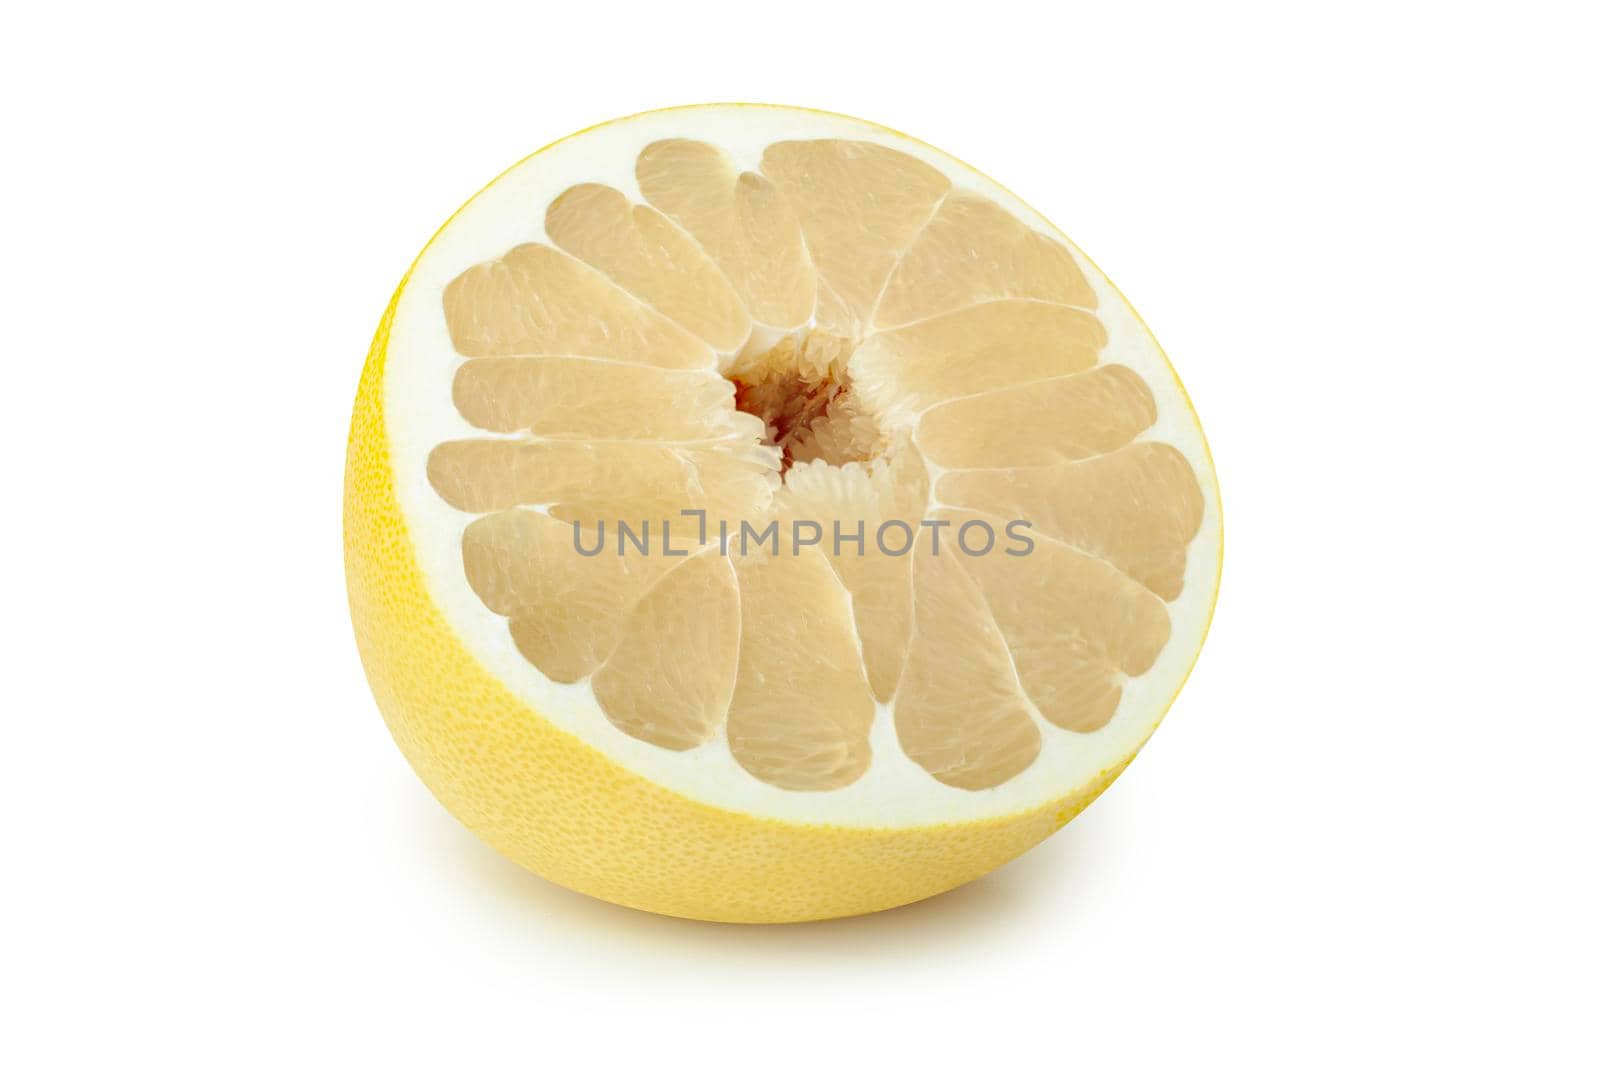 Pamela citrus fruit one cut in half isolated on white background by SlayCer